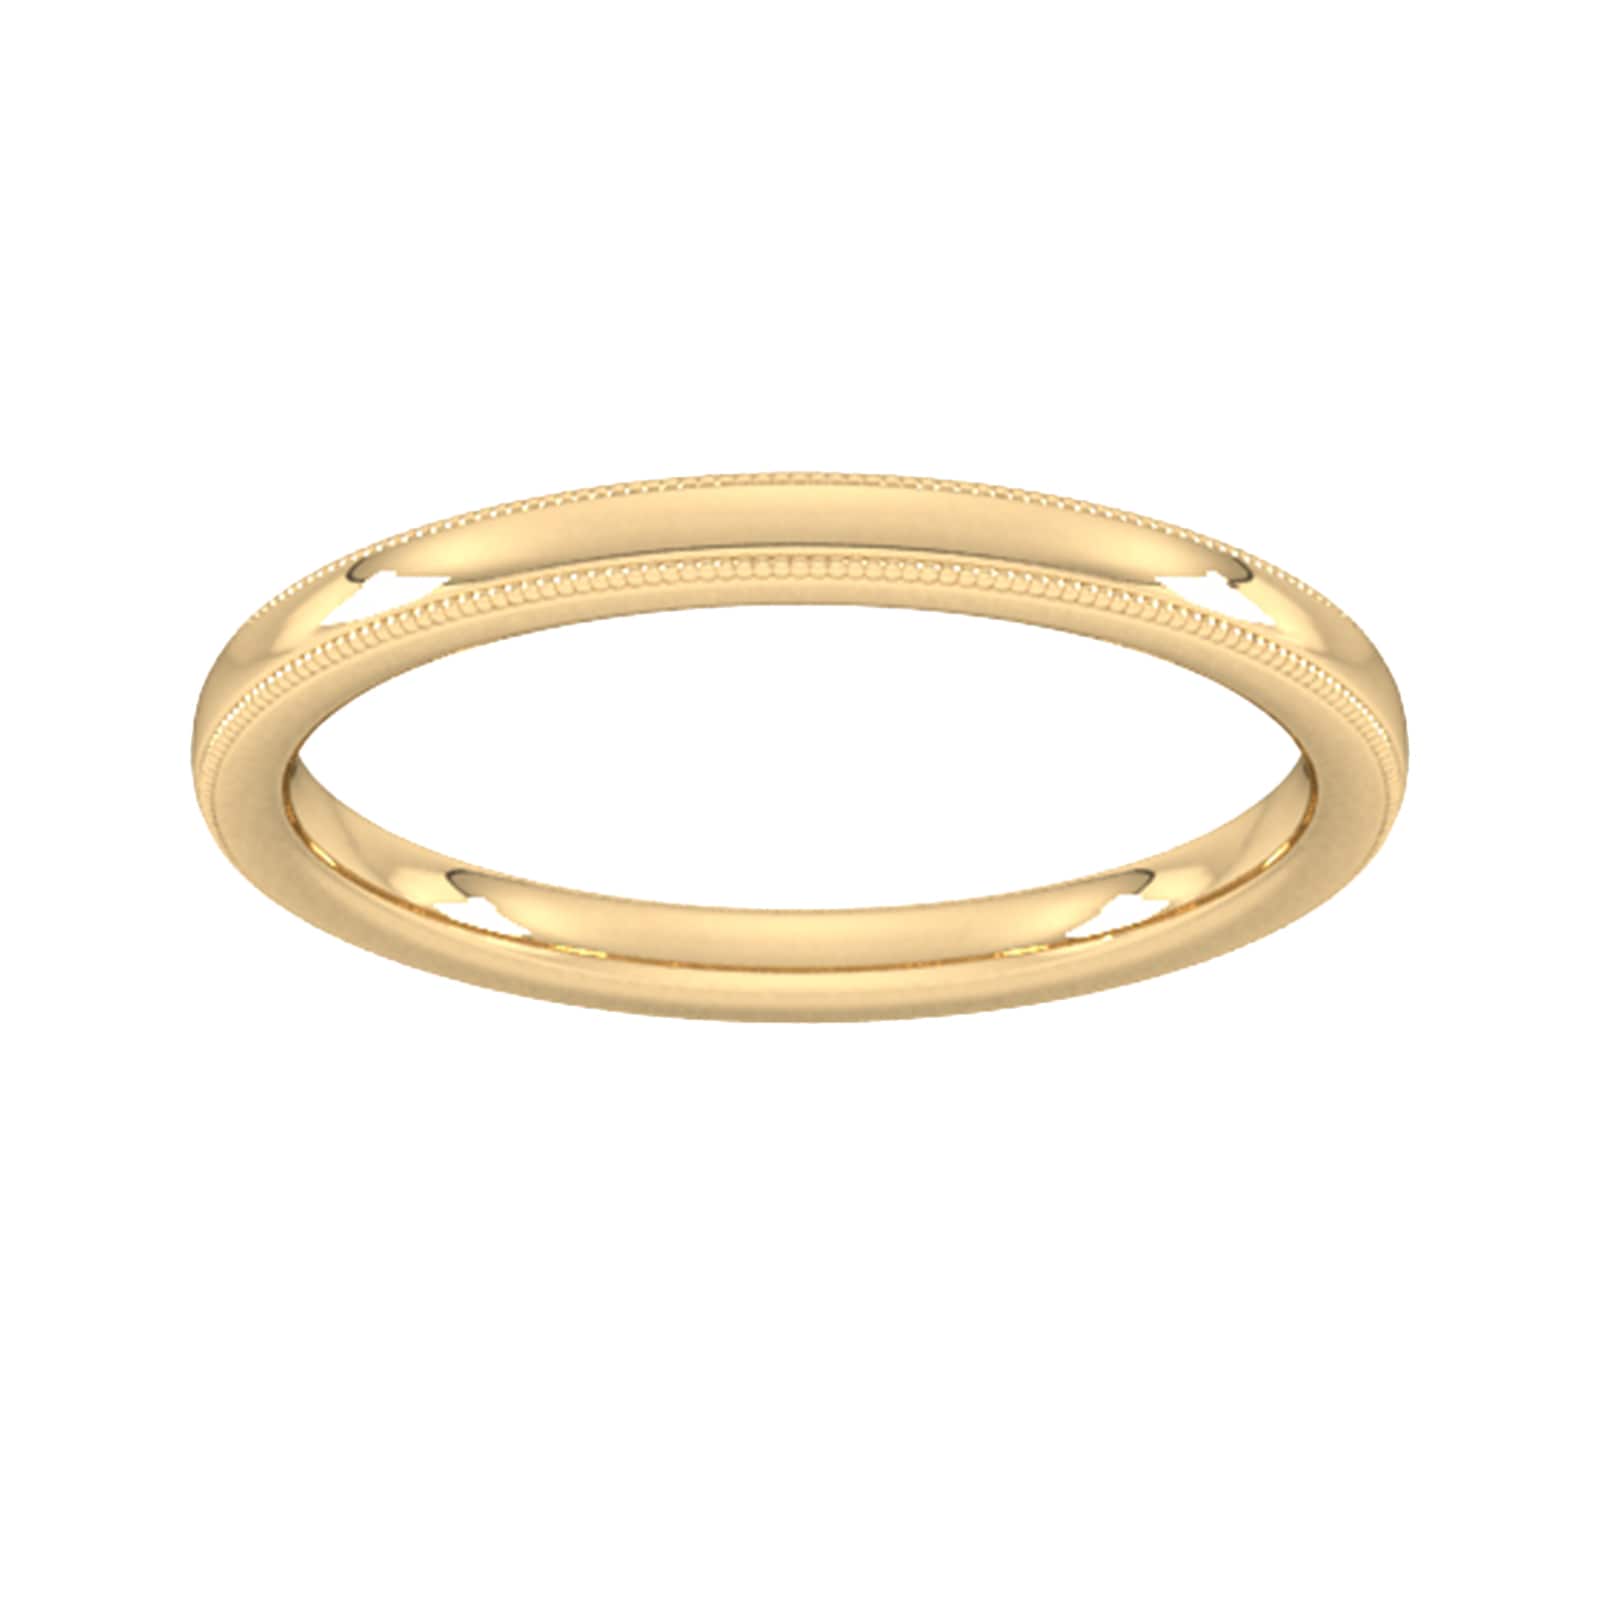 2mm D Shape Heavy Milgrain Edge Wedding Ring In 9 Carat Yellow Gold - Ring Size Q